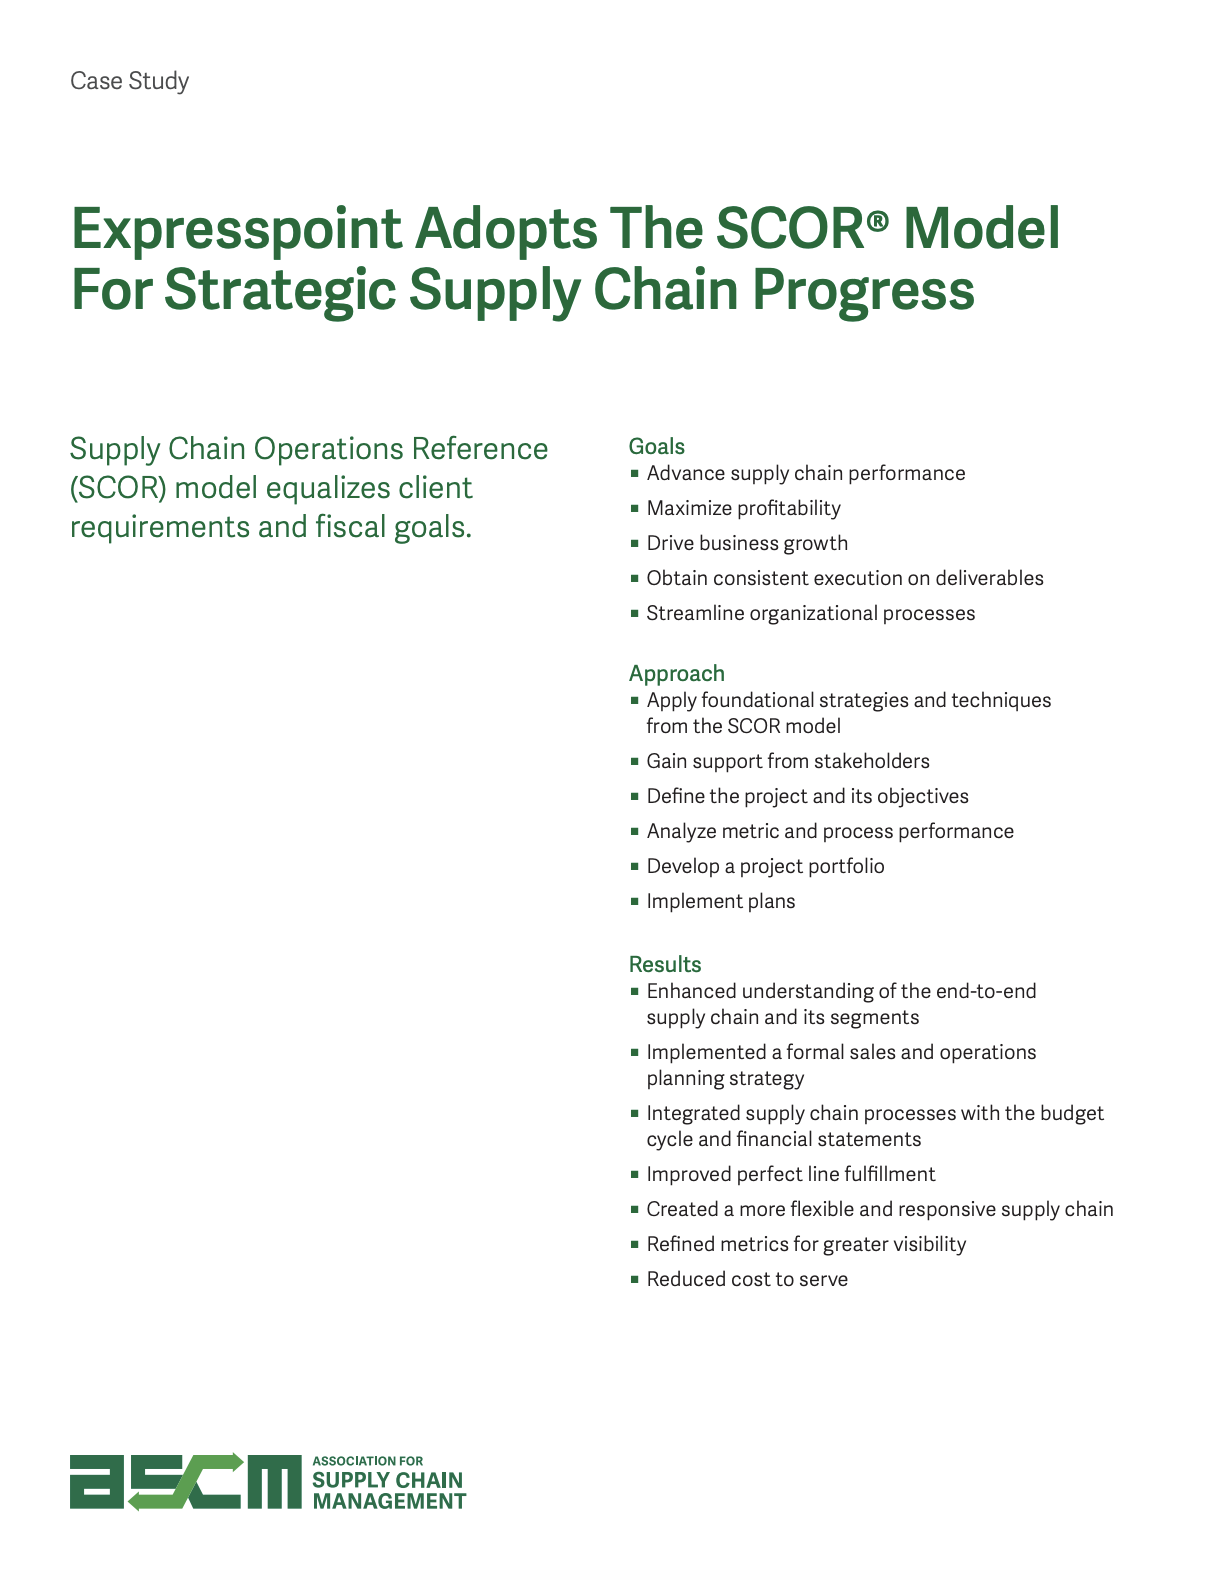 Expresspoint Adopts SCOR® Model For Strategic Supply Chain Progress